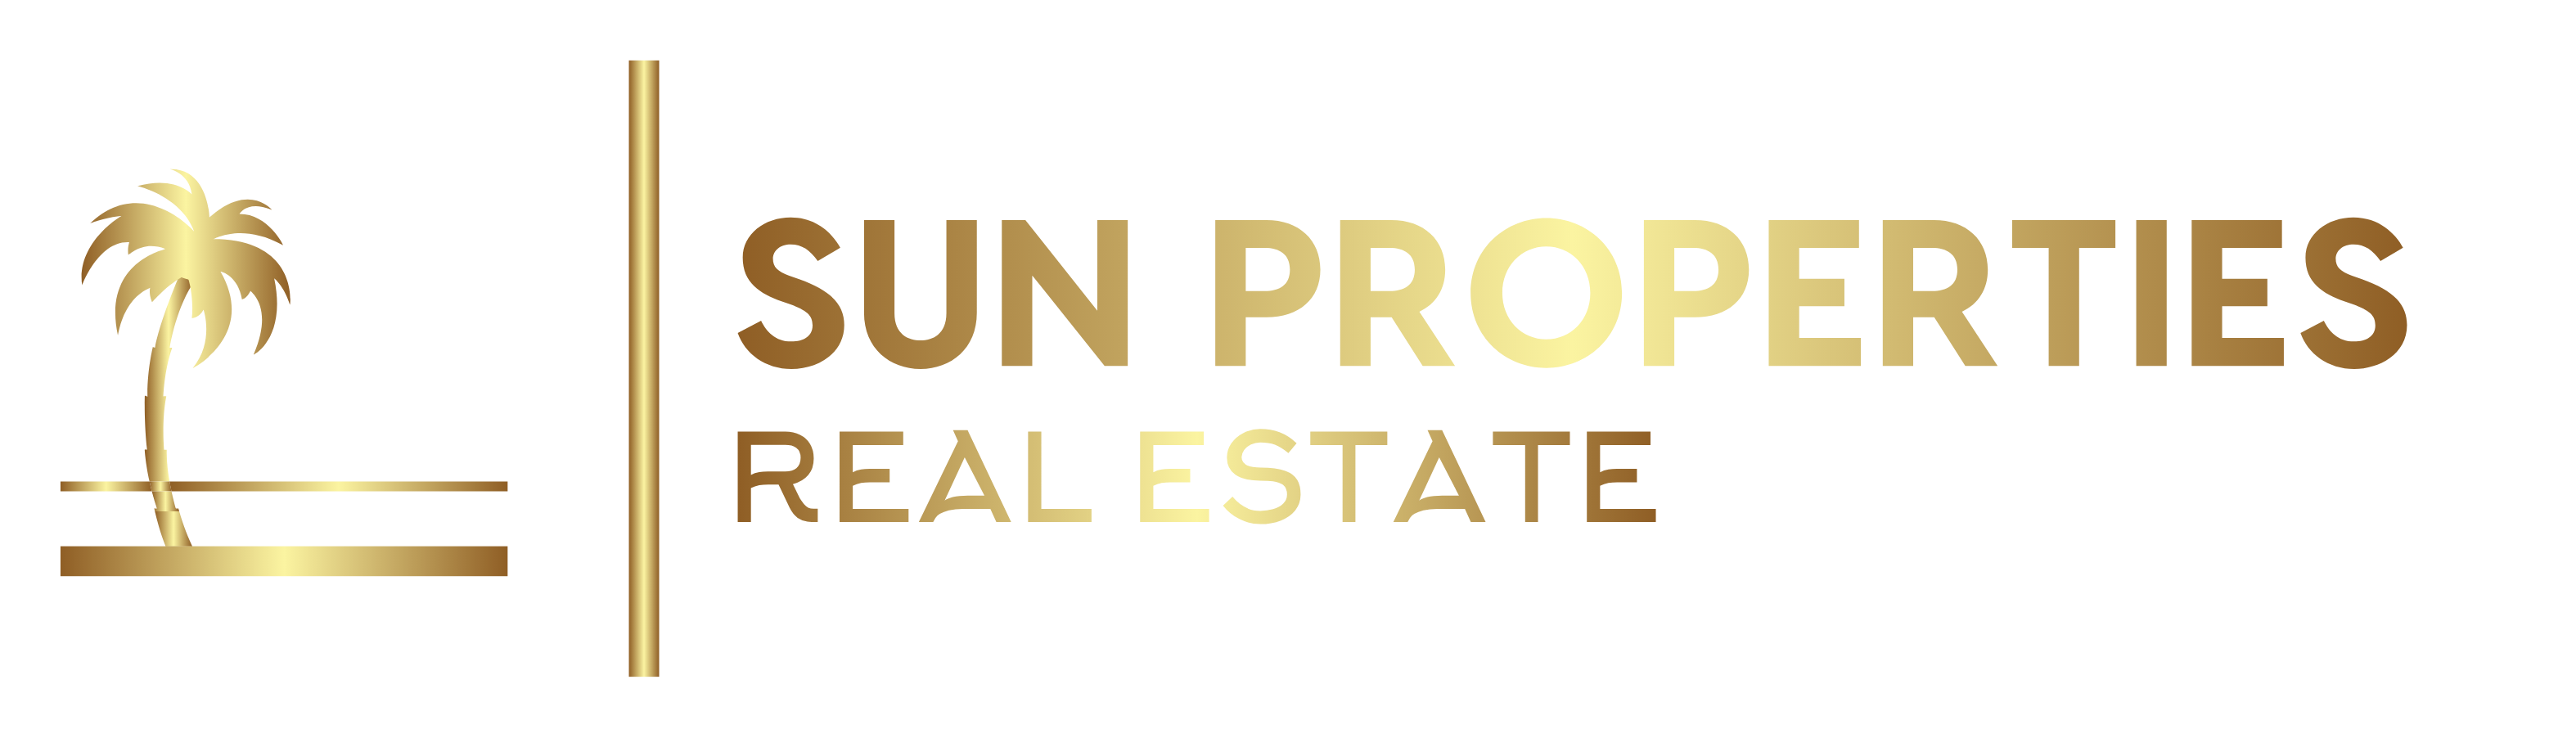 SUN PROPERTIES LLC